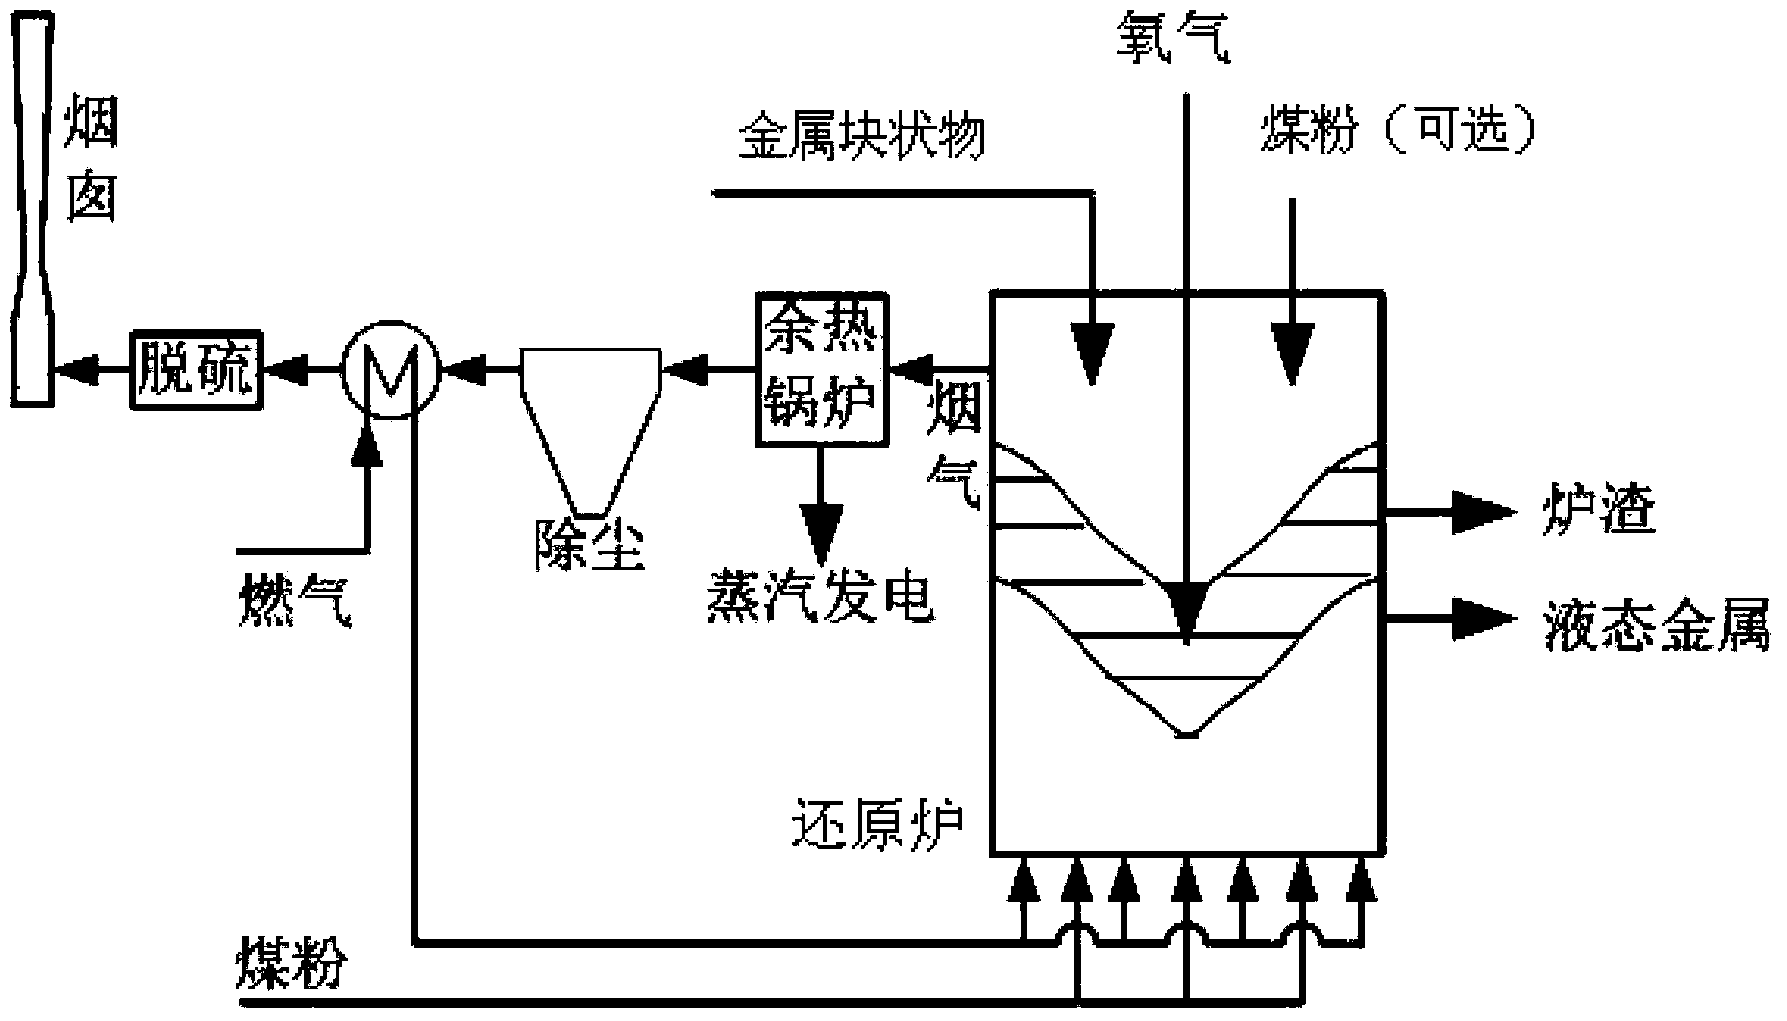 Method for preparing metal elementary substance